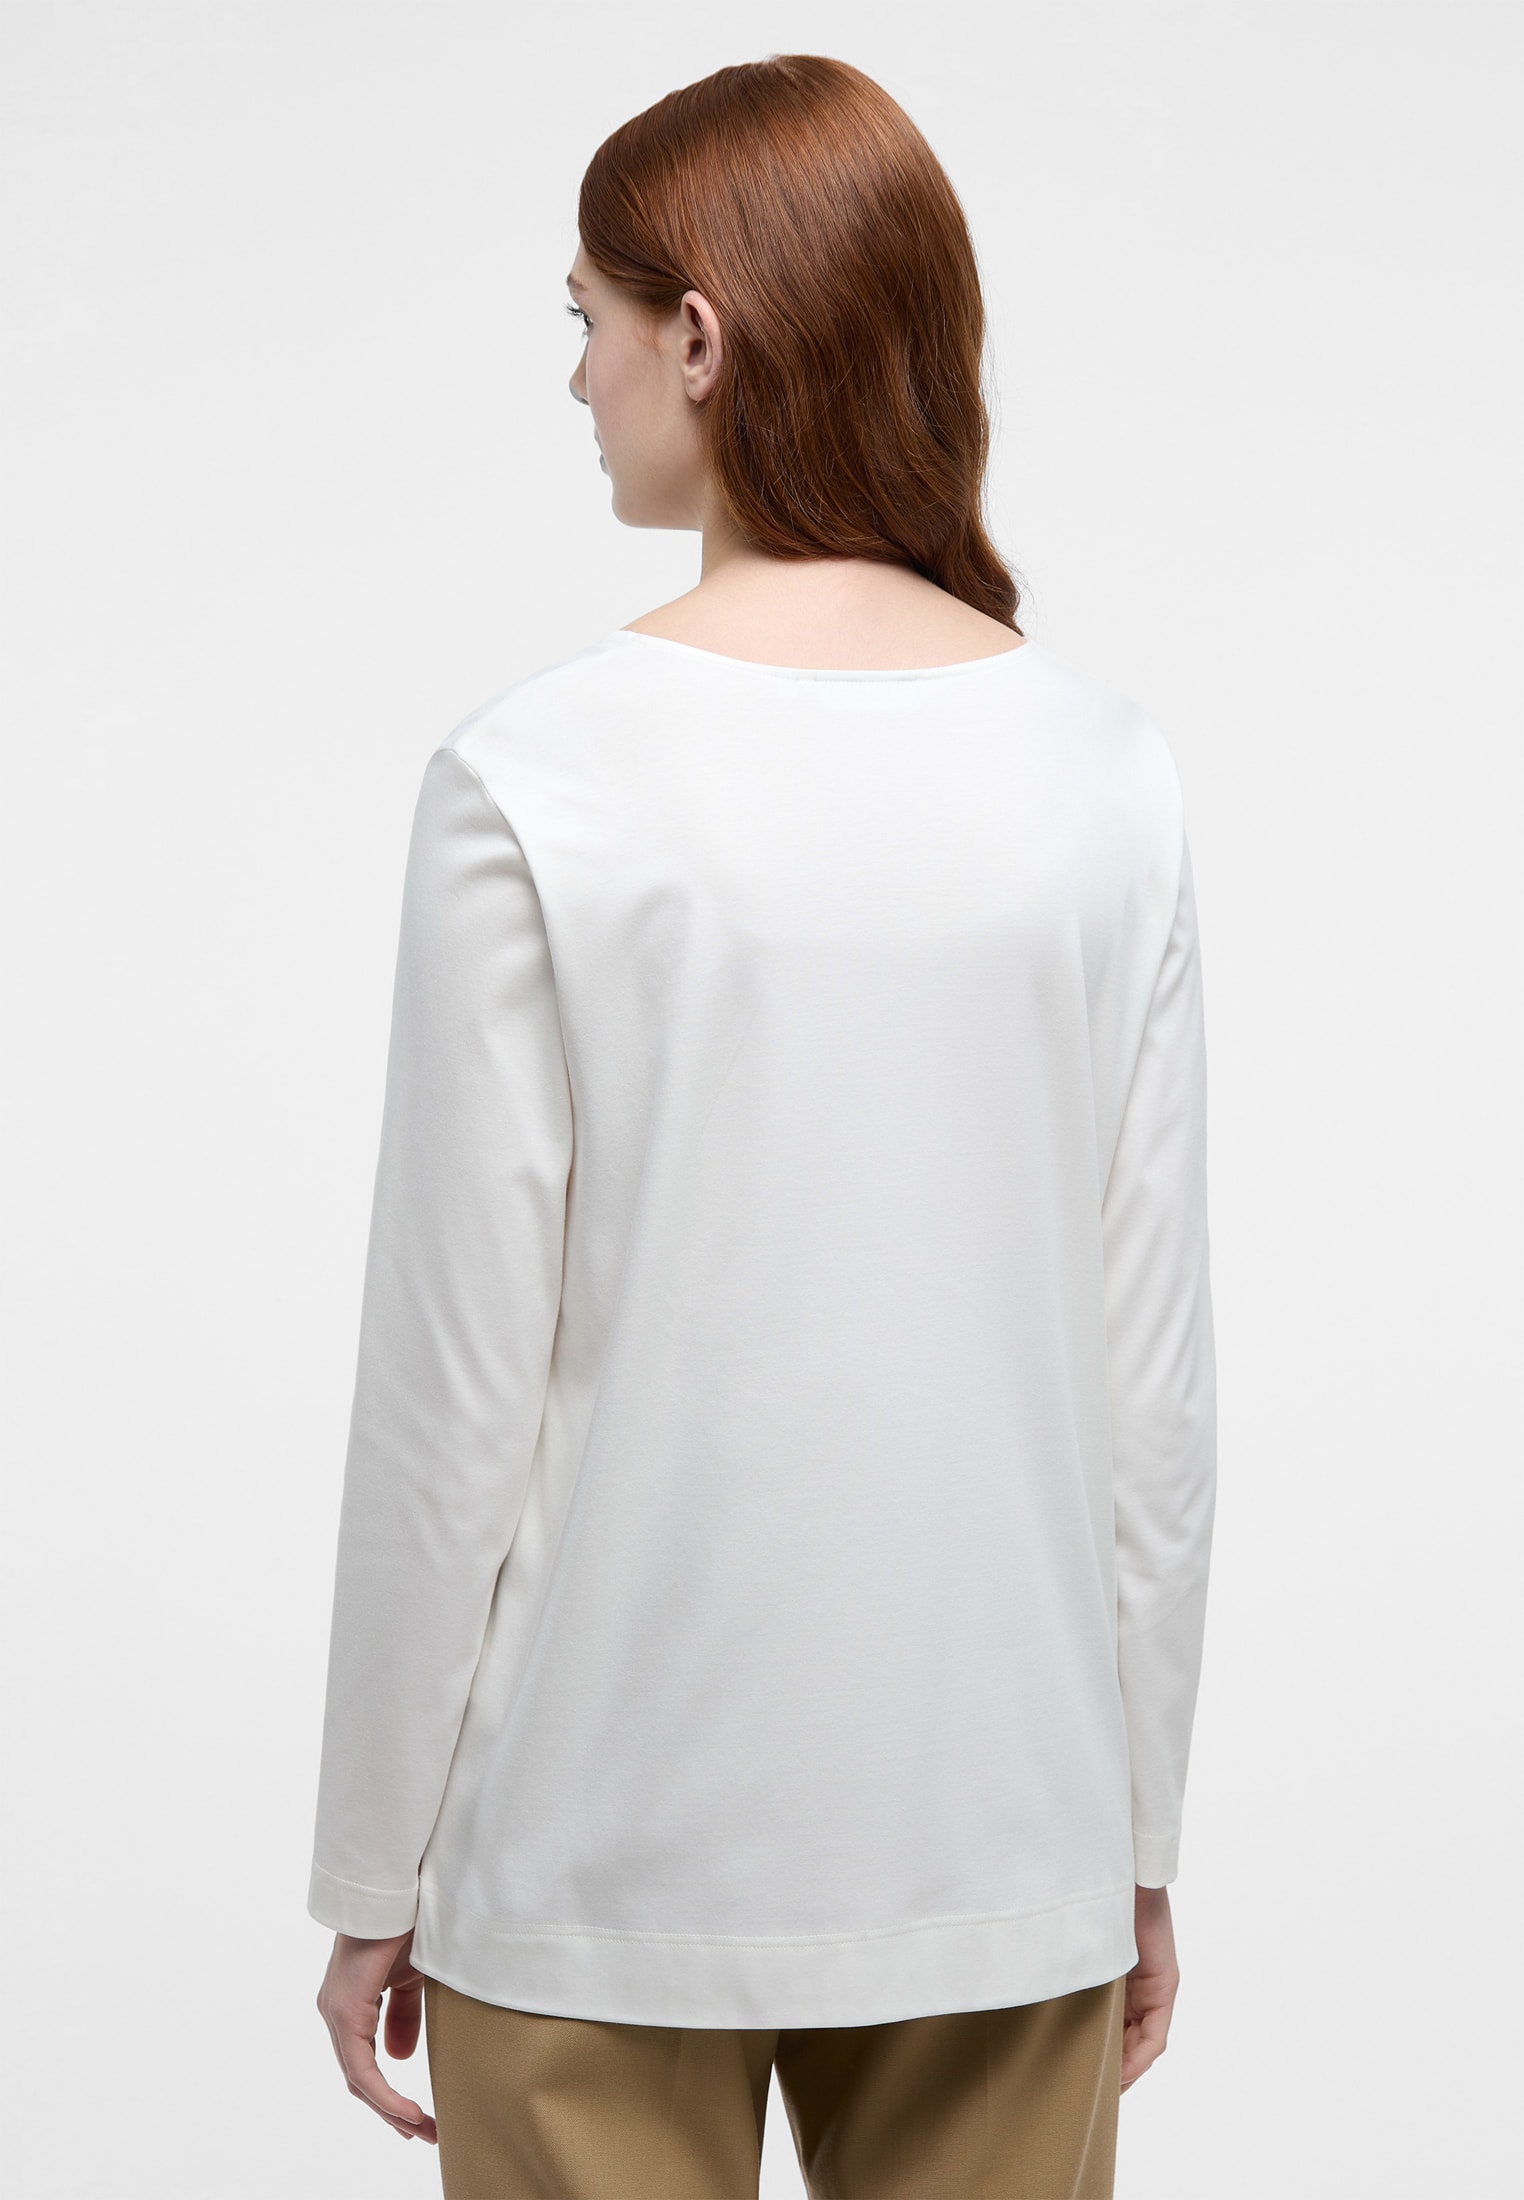 Viscose Shirt Bluse in off-white unifarben | off-white | 46 | Langarm |  2BL04252-00-02-46-1/1